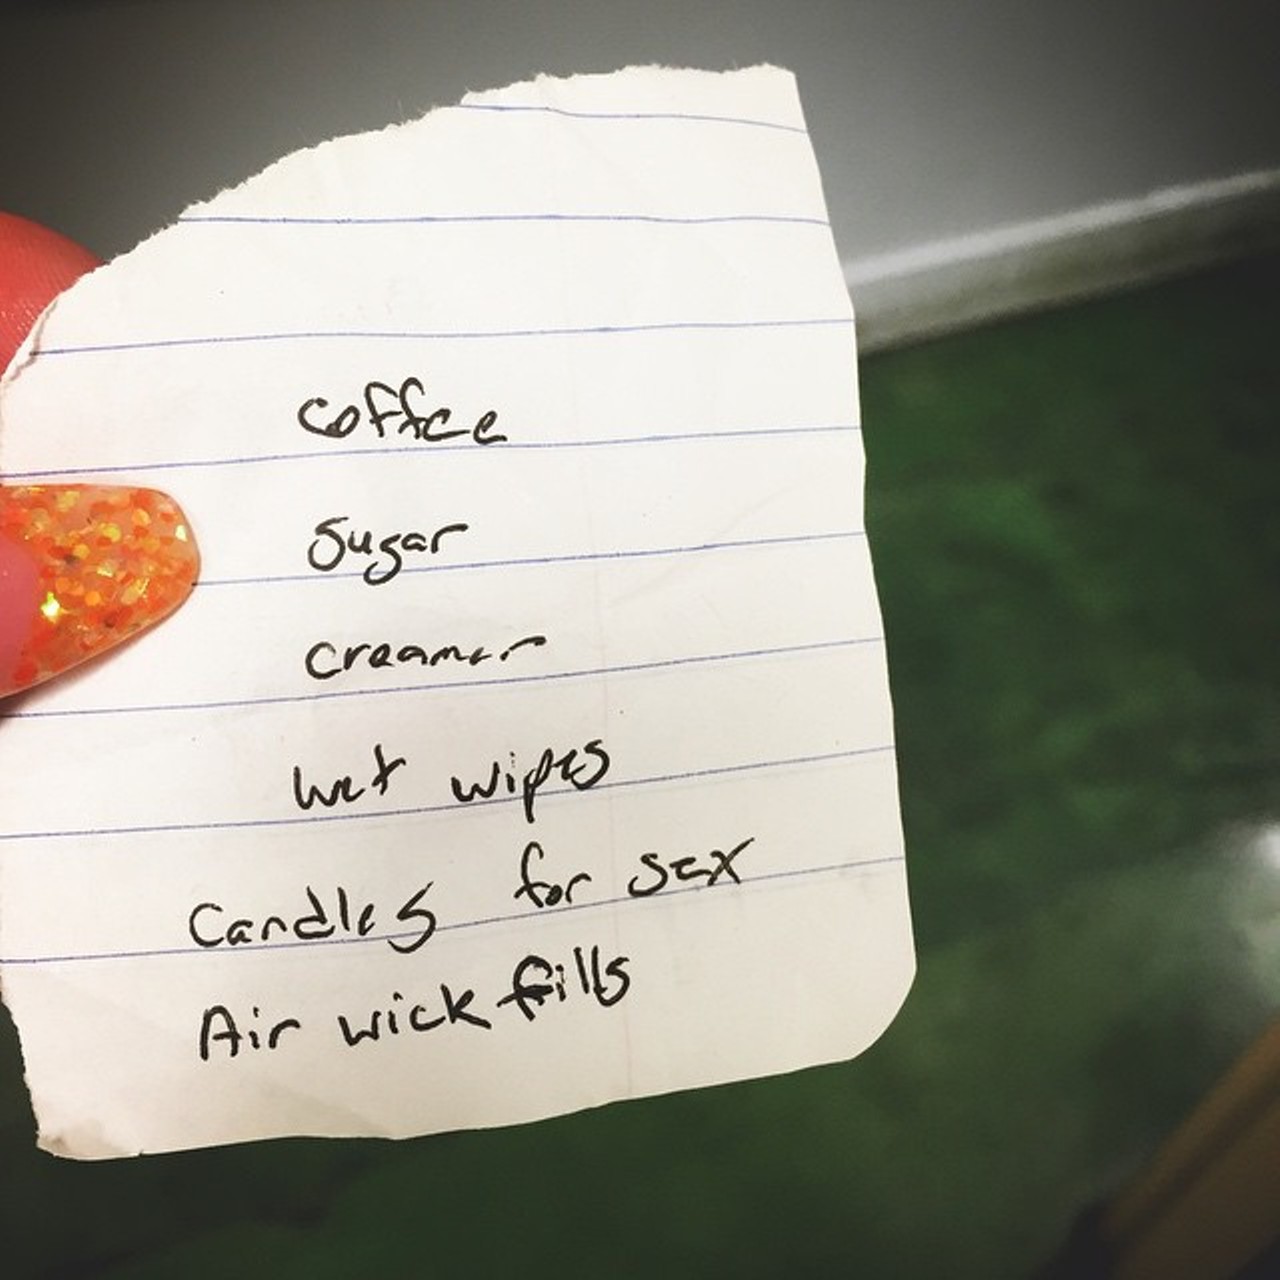 "Someone left their grocery list behind"
Photo via Instagram user tayschleigh